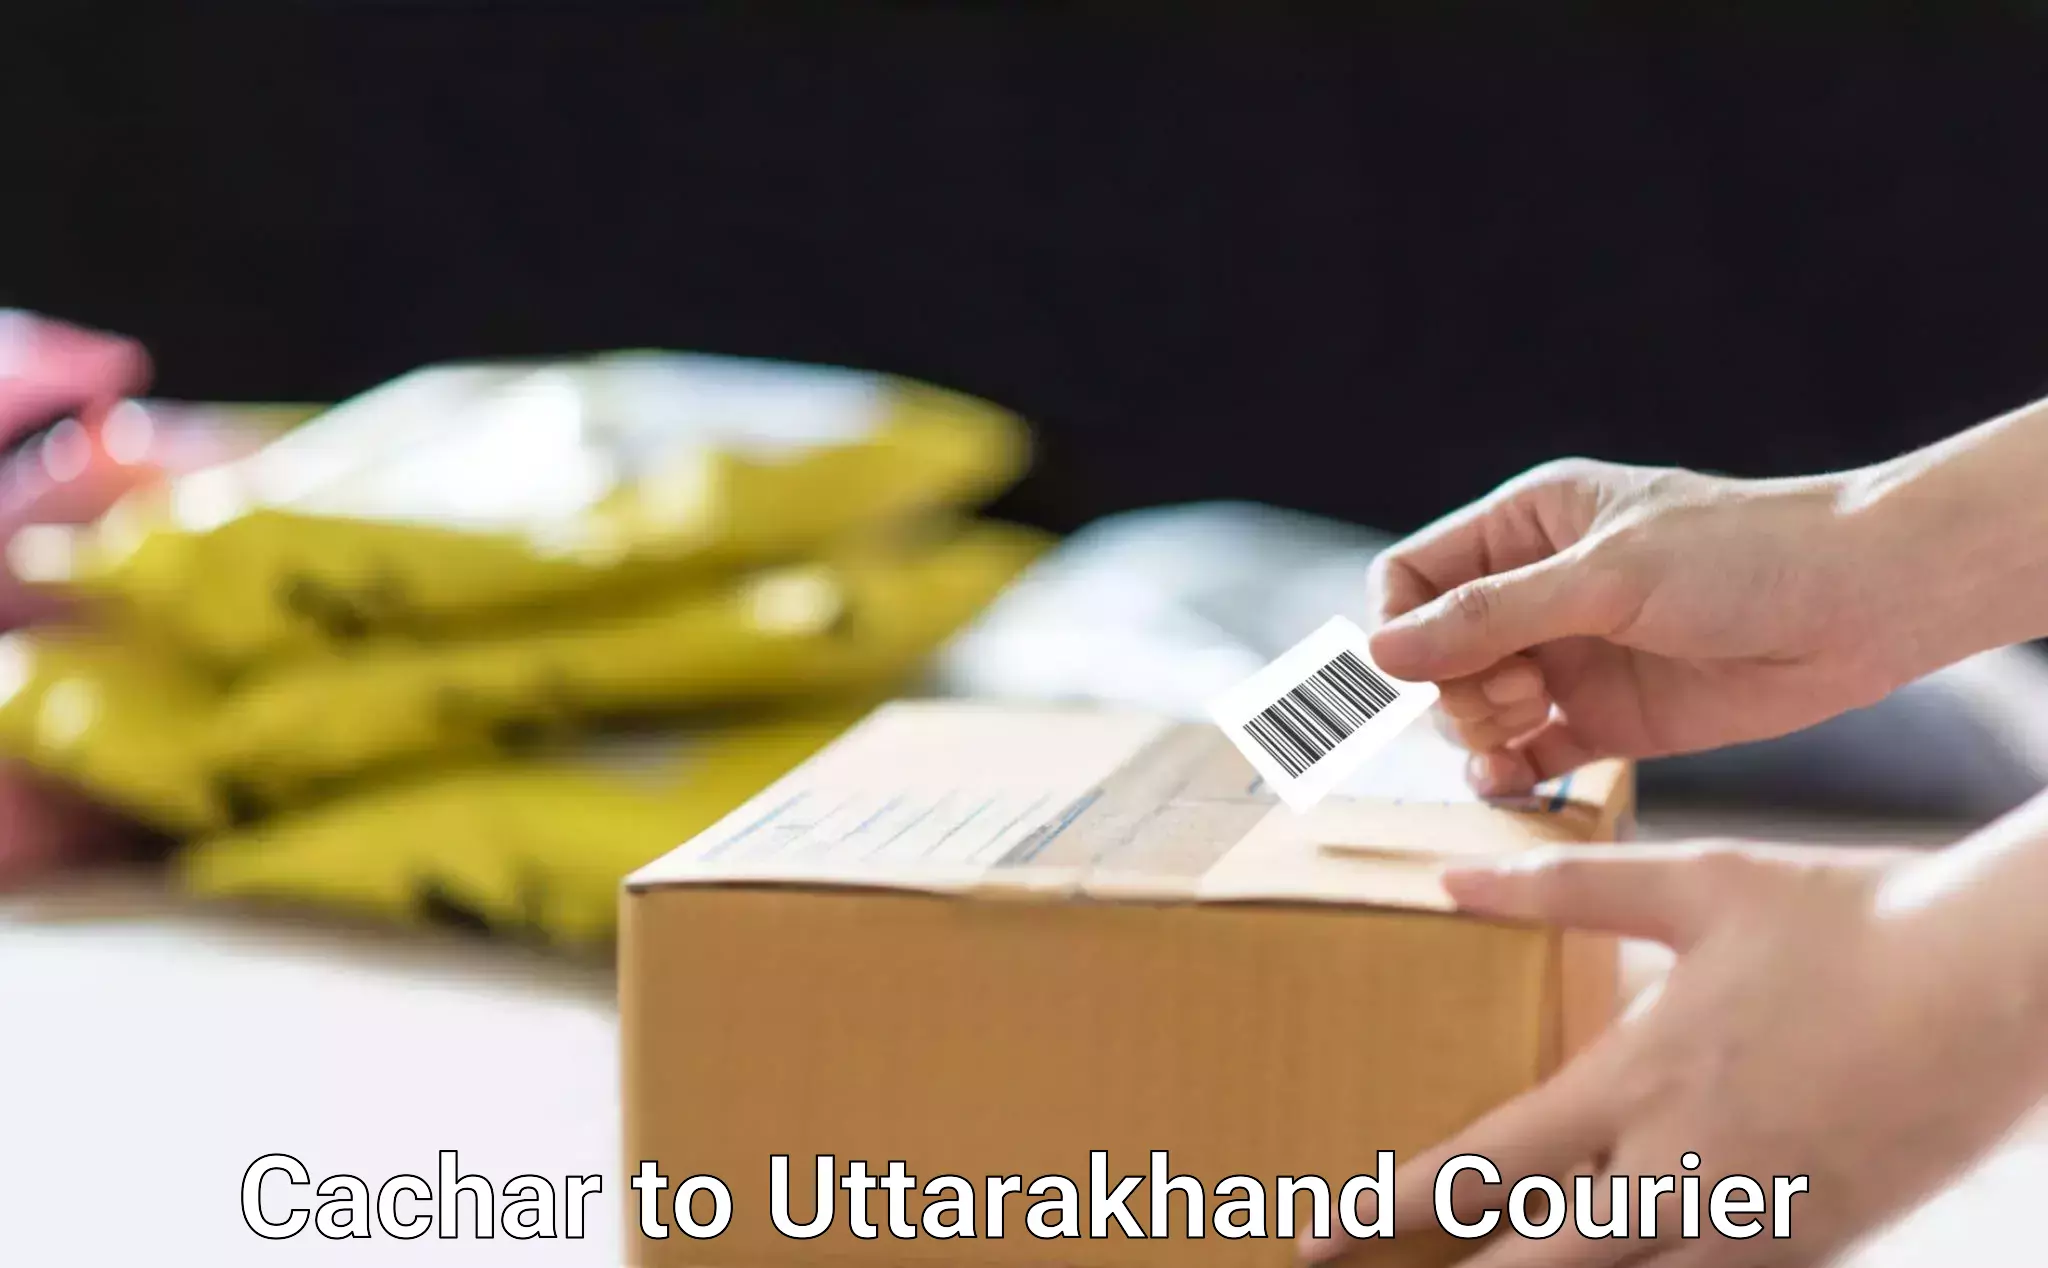 Diverse delivery methods Cachar to Dehradun